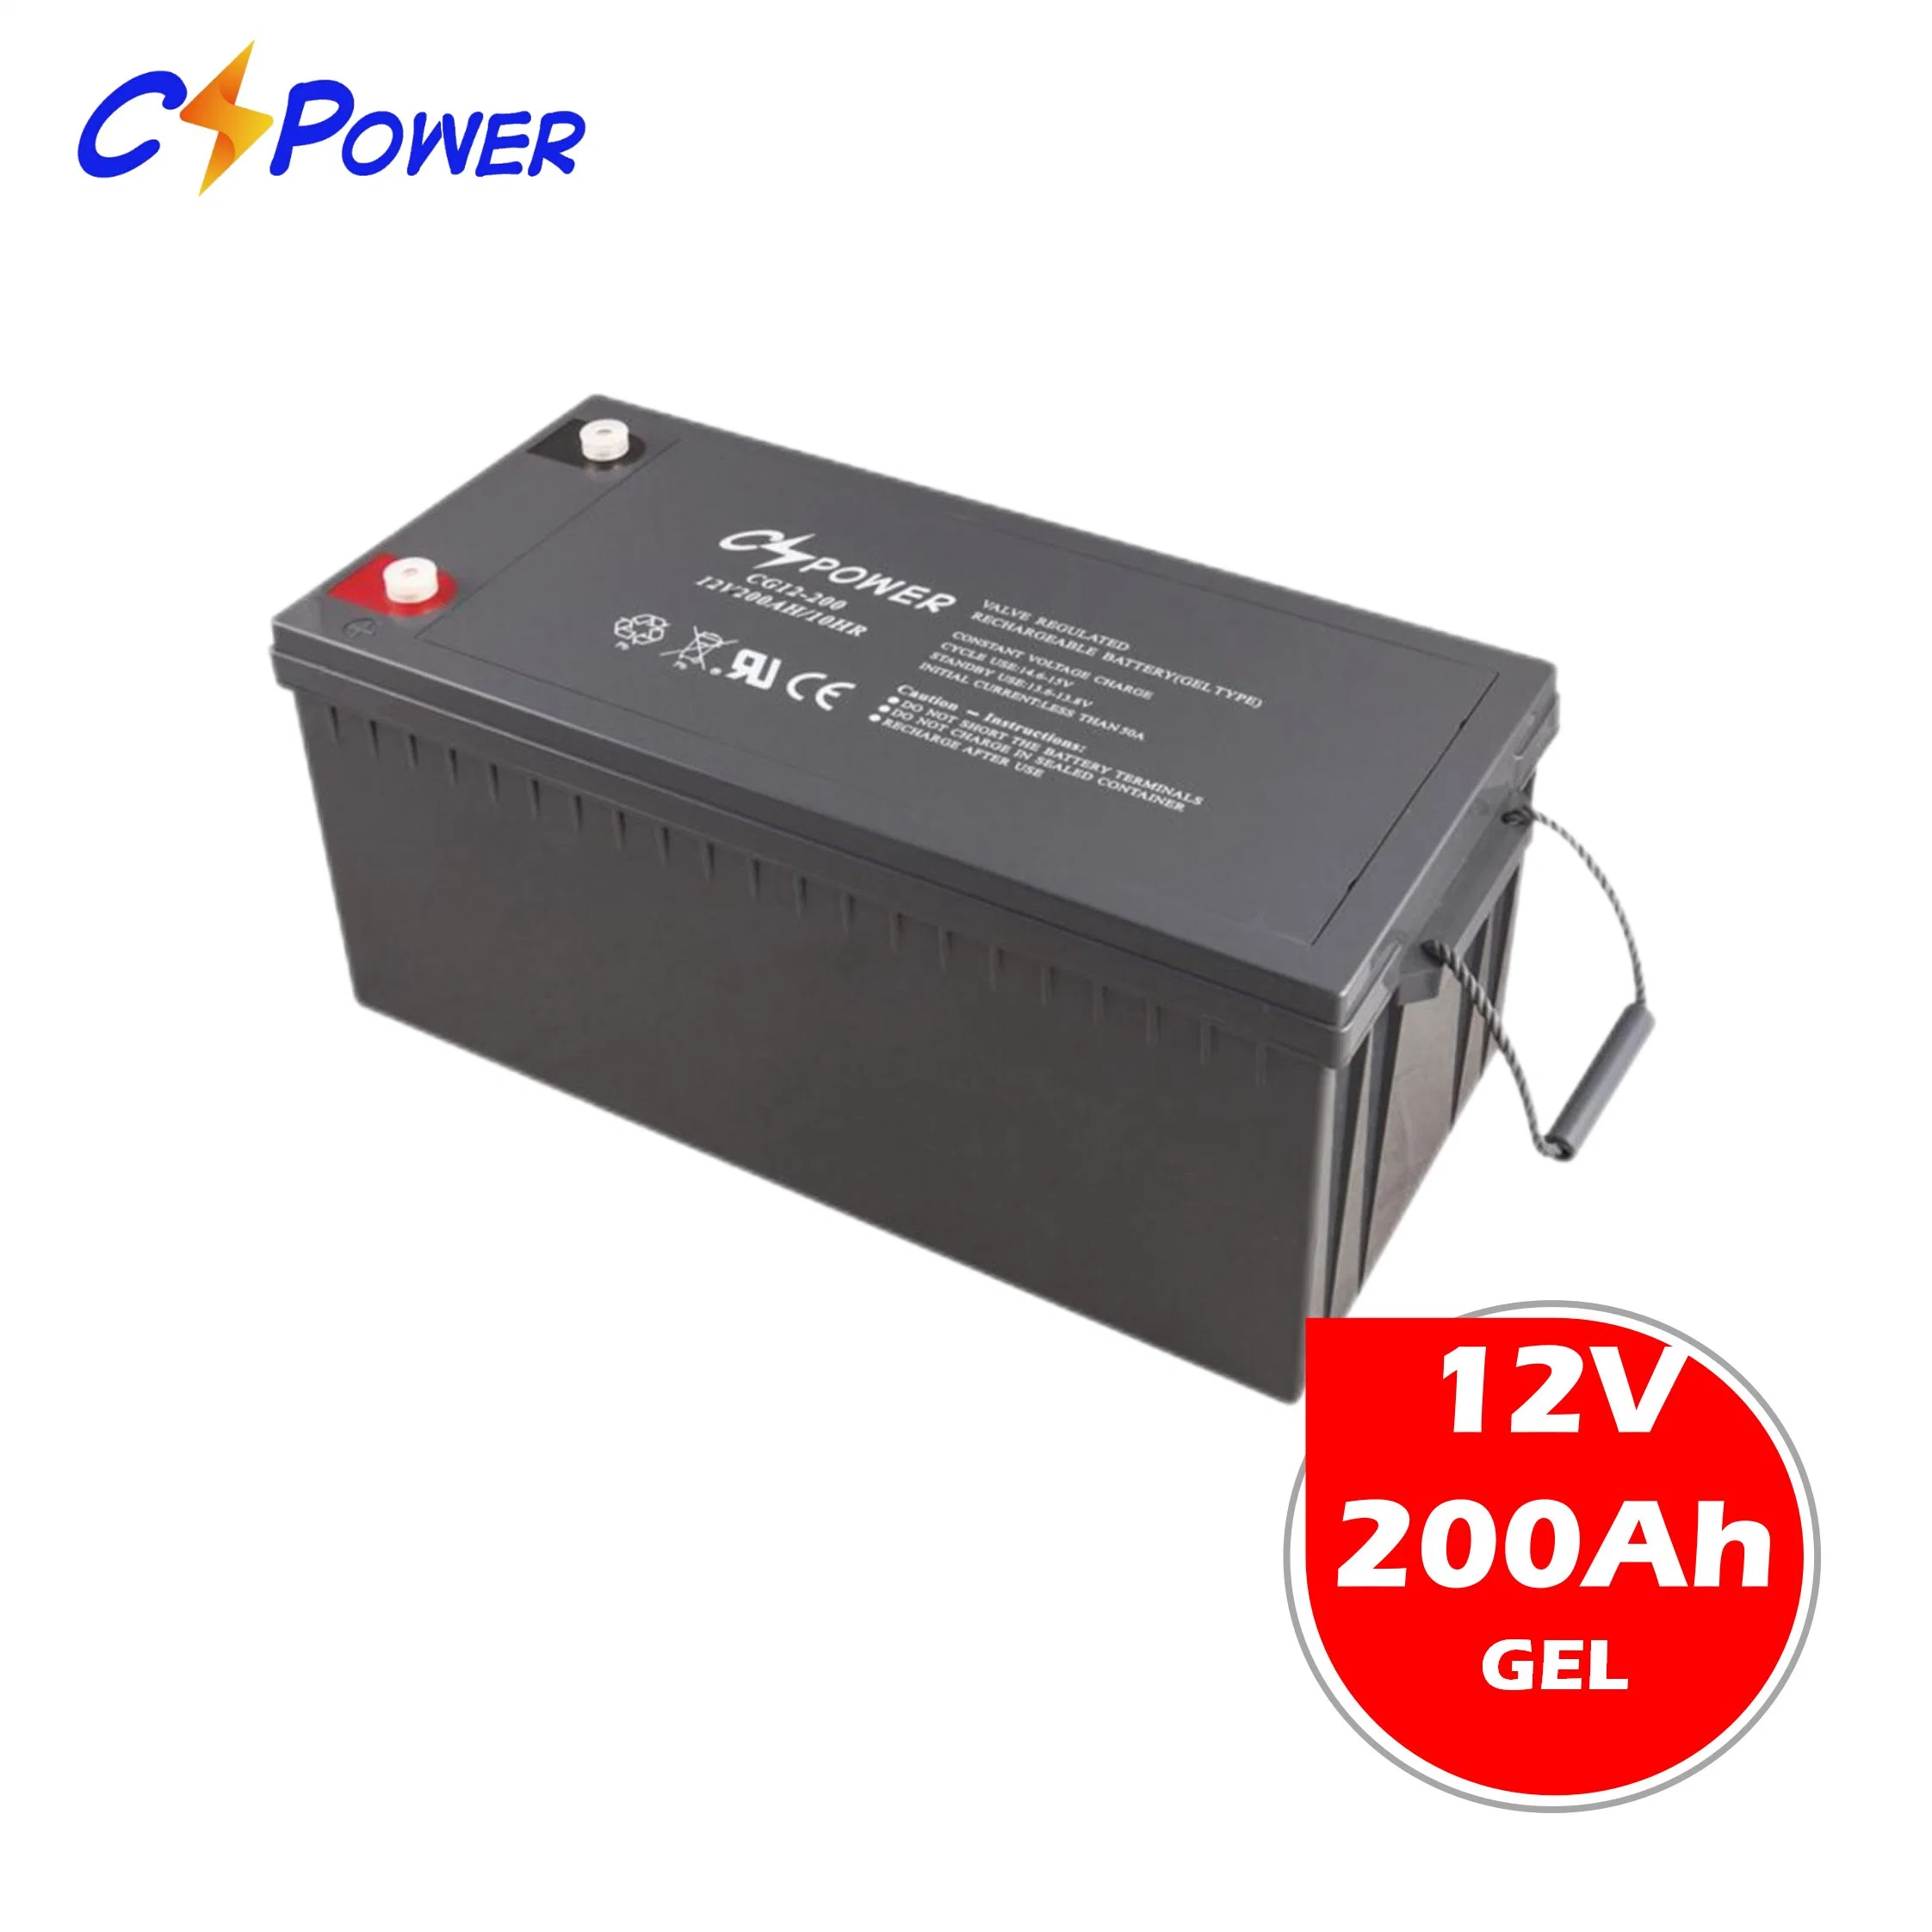 Cspower VRLA SMF 200ah Gel Battery 12V Sealed-Acid-Battery/Solar Battery/Storage-Battery/Solar-Power-Battery/CSM